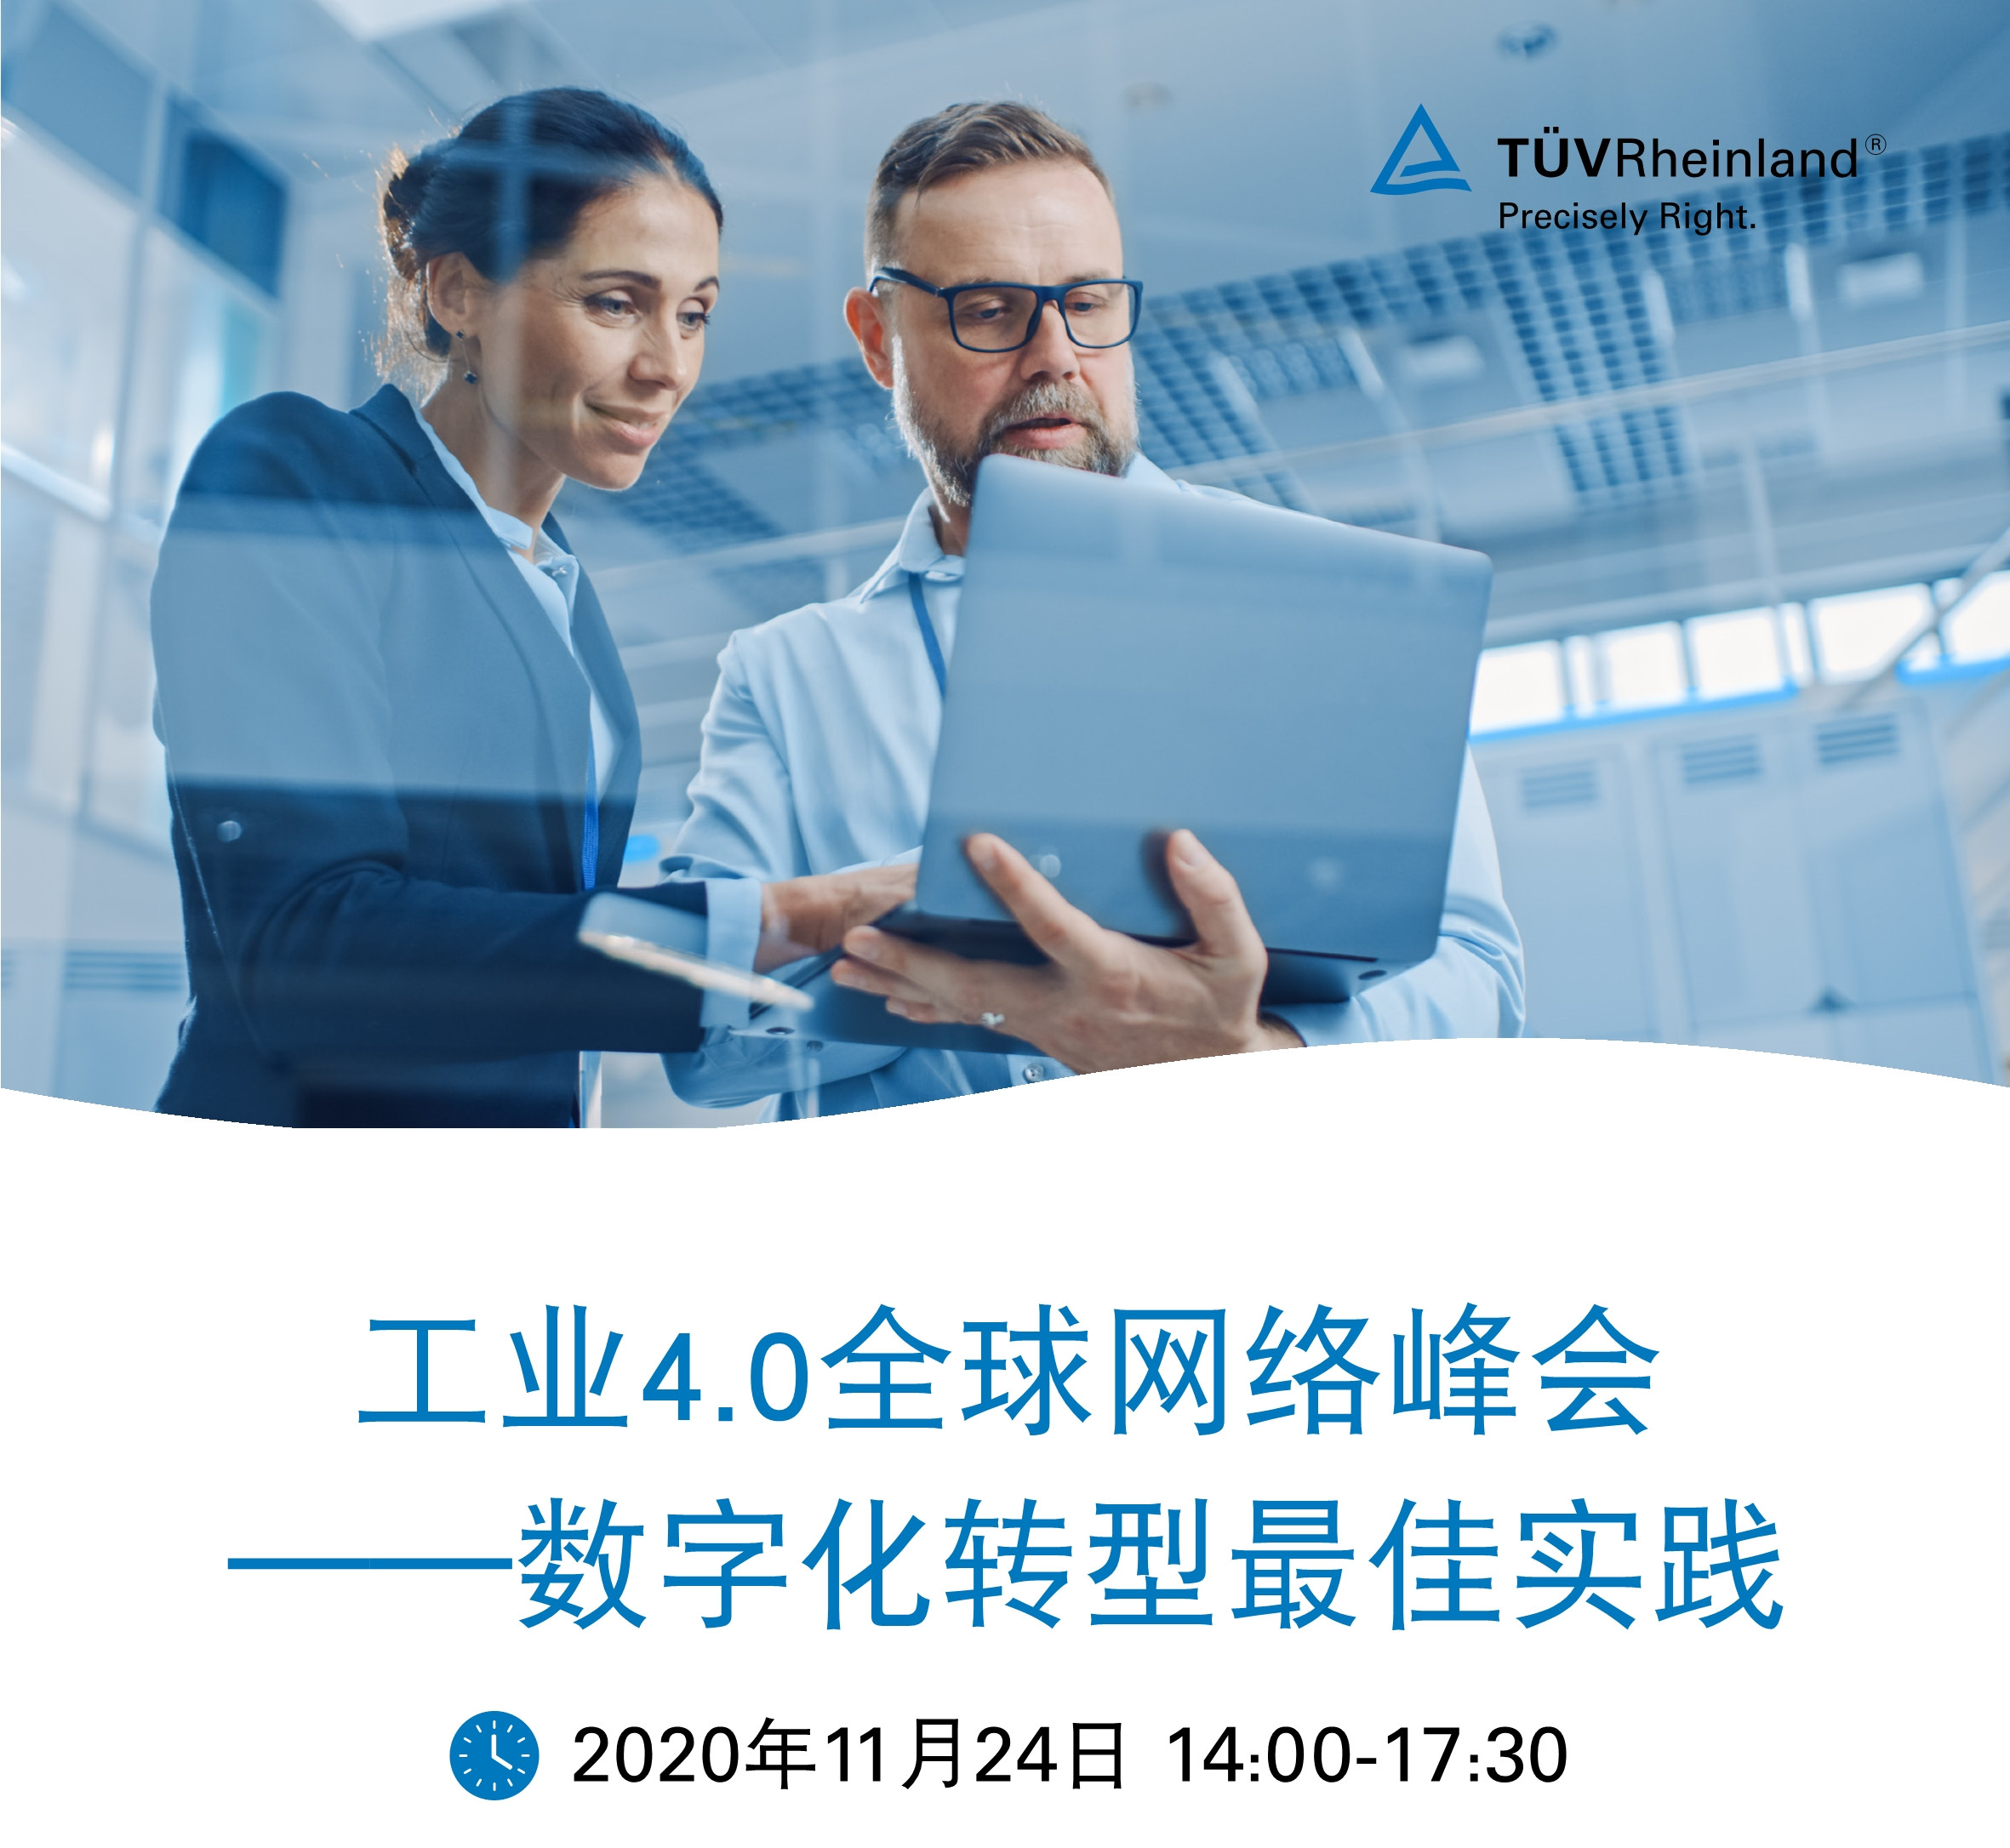 TÜV莱茵举办工业4.0全球线上峰会诚邀陕西企业参会 分享企业数字化转型最佳实践案例